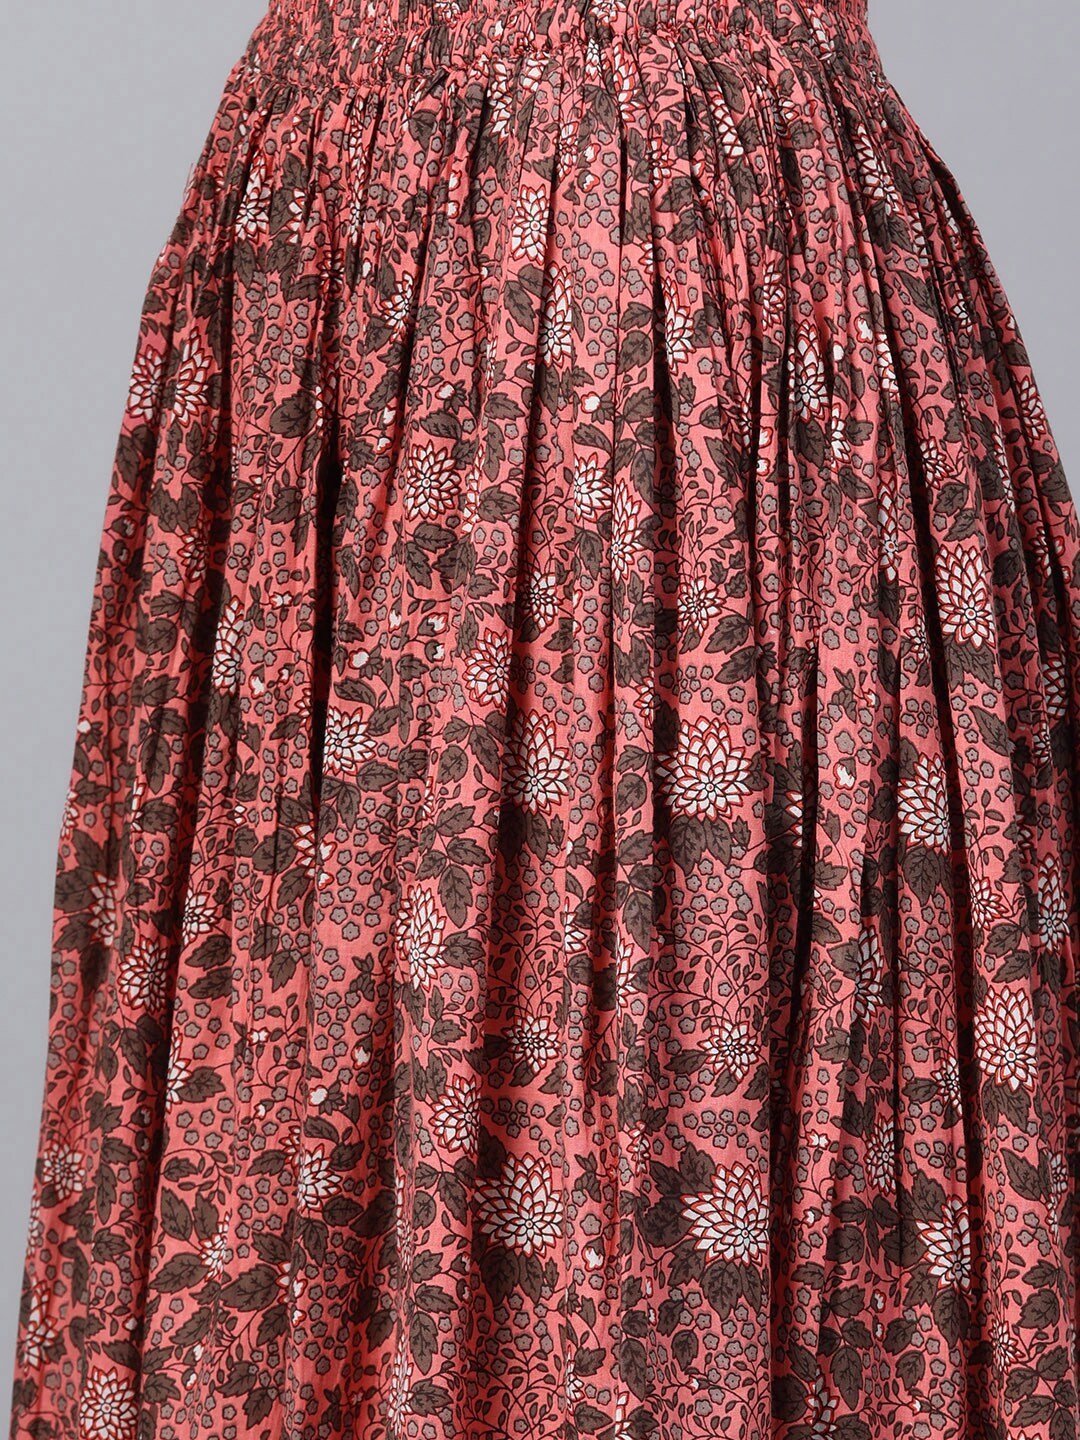 Women's  Pink & Charcoal Grey Ethnic Printed Kurta with Skirt & Dupatta - AKS